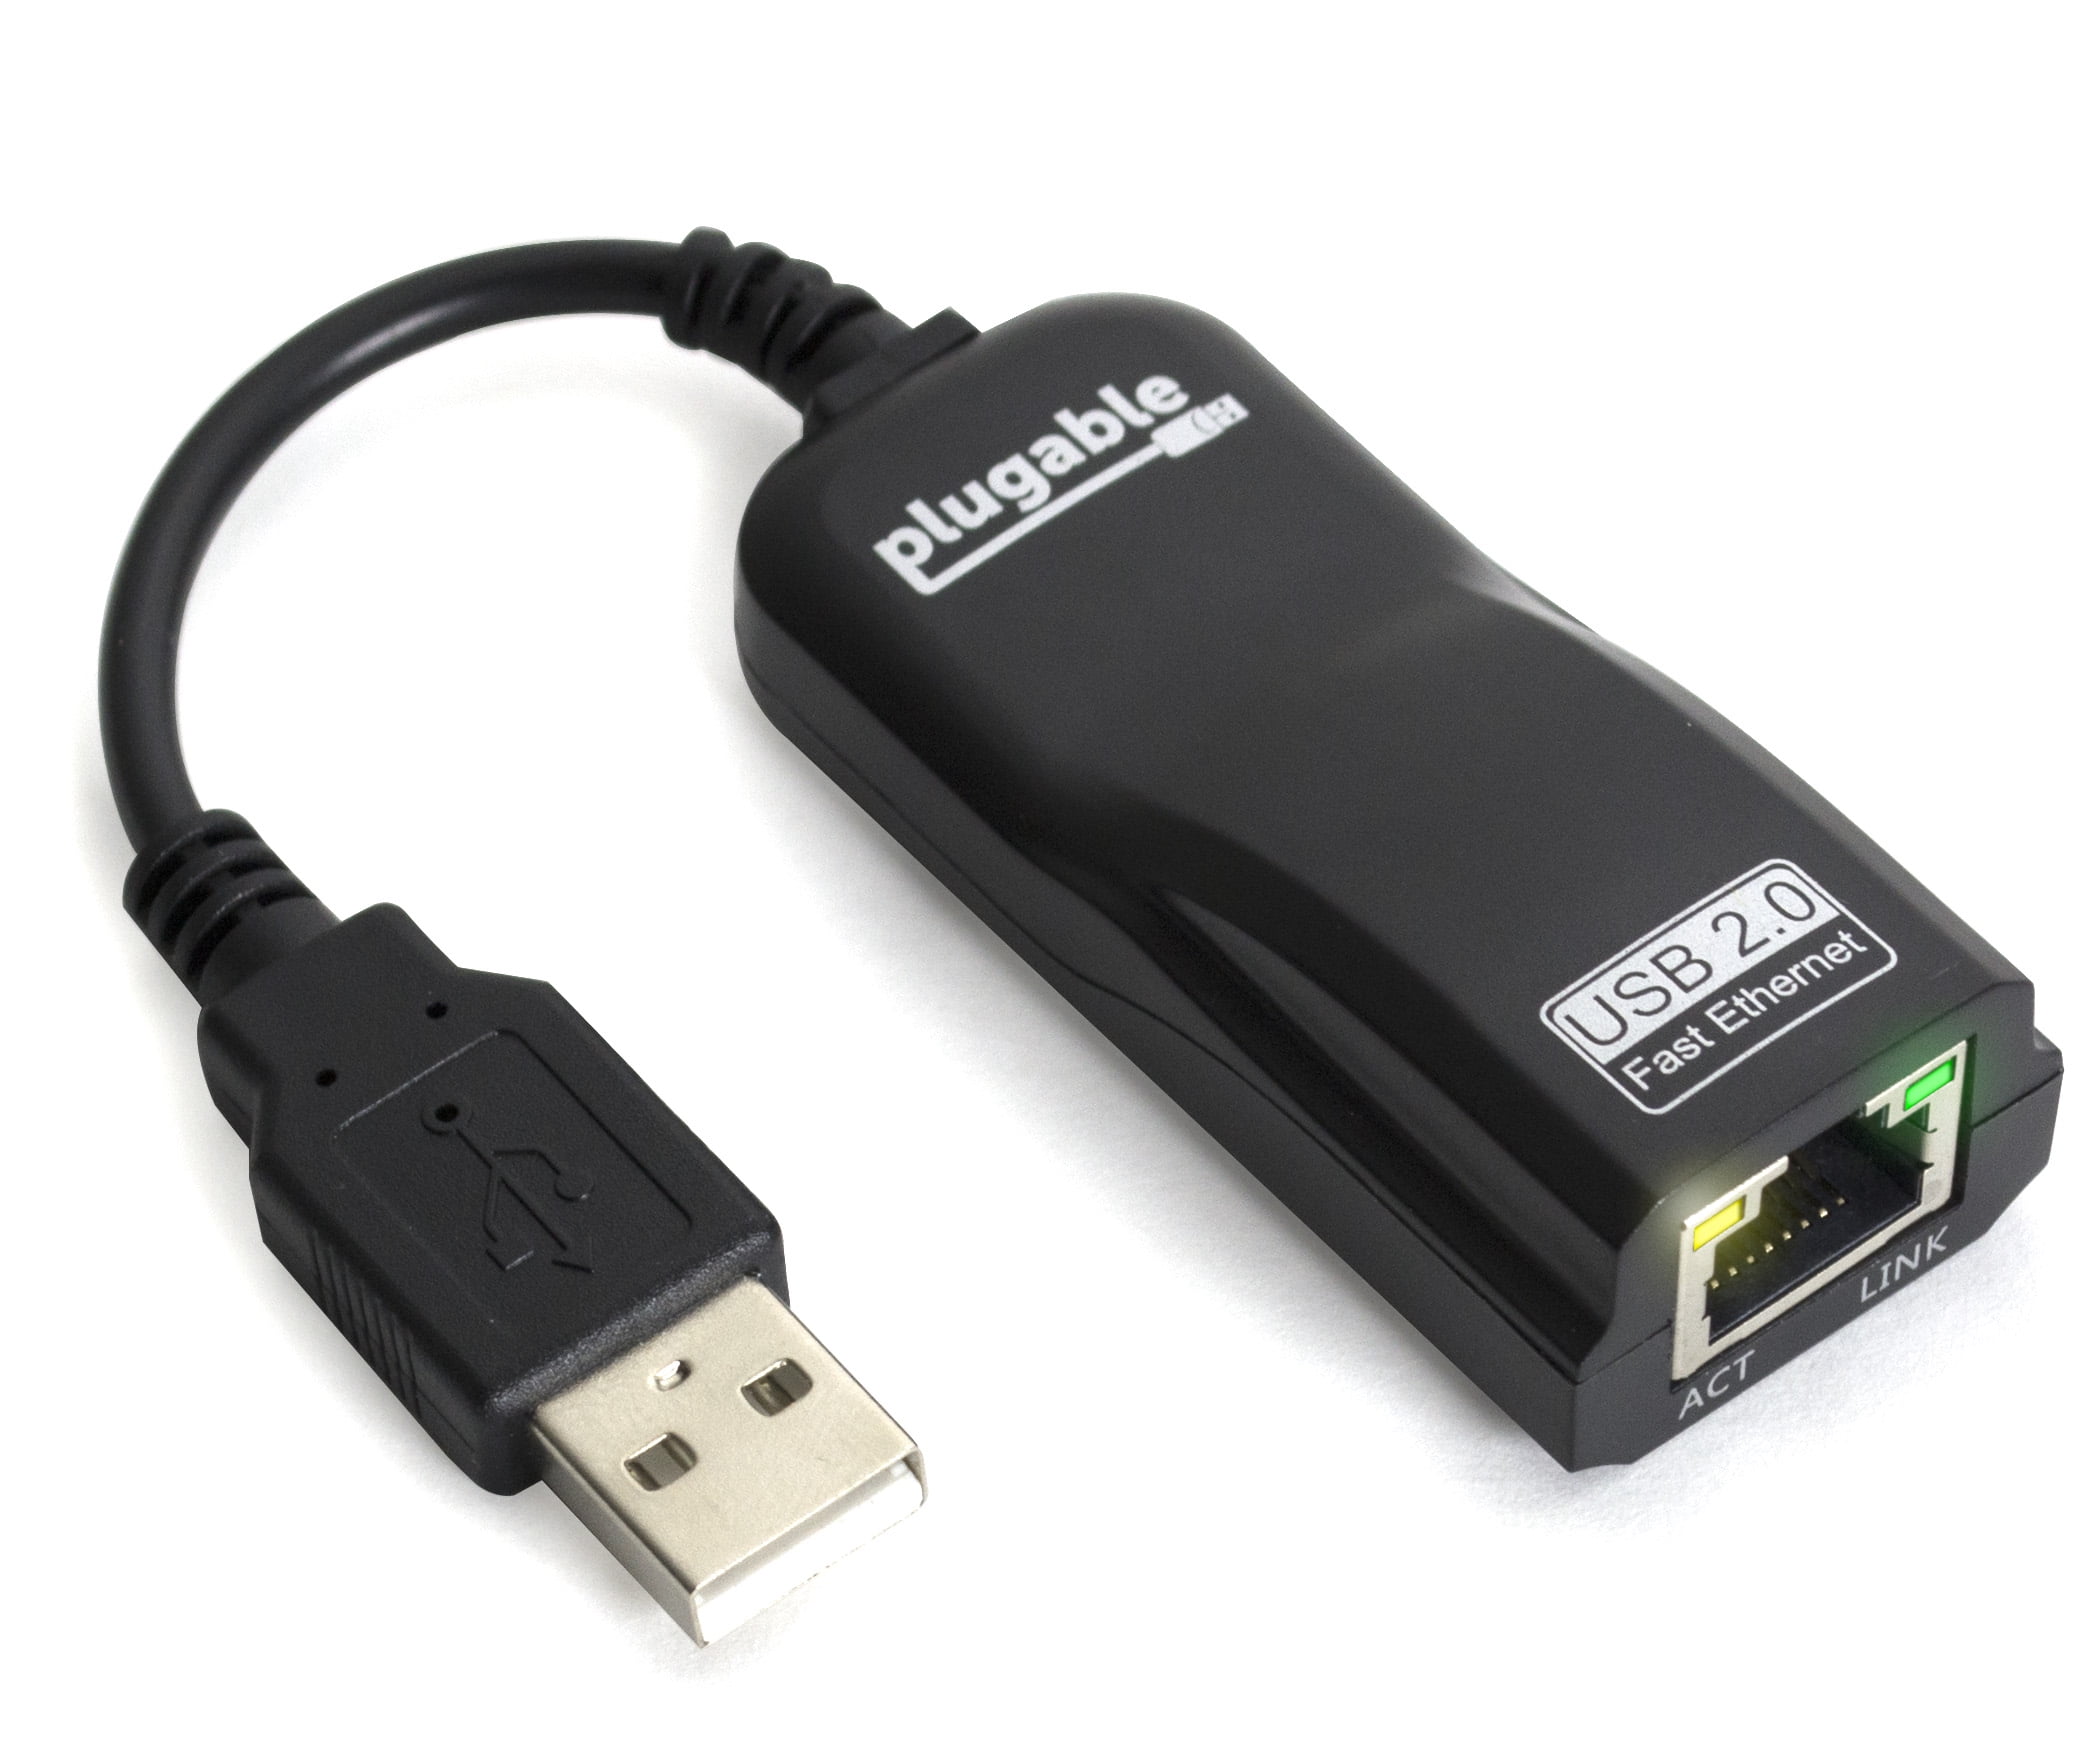 Plugable USB 3.0 3-Port Bus Powered Hub with Gigabit Ethernet – Plugable  Technologies